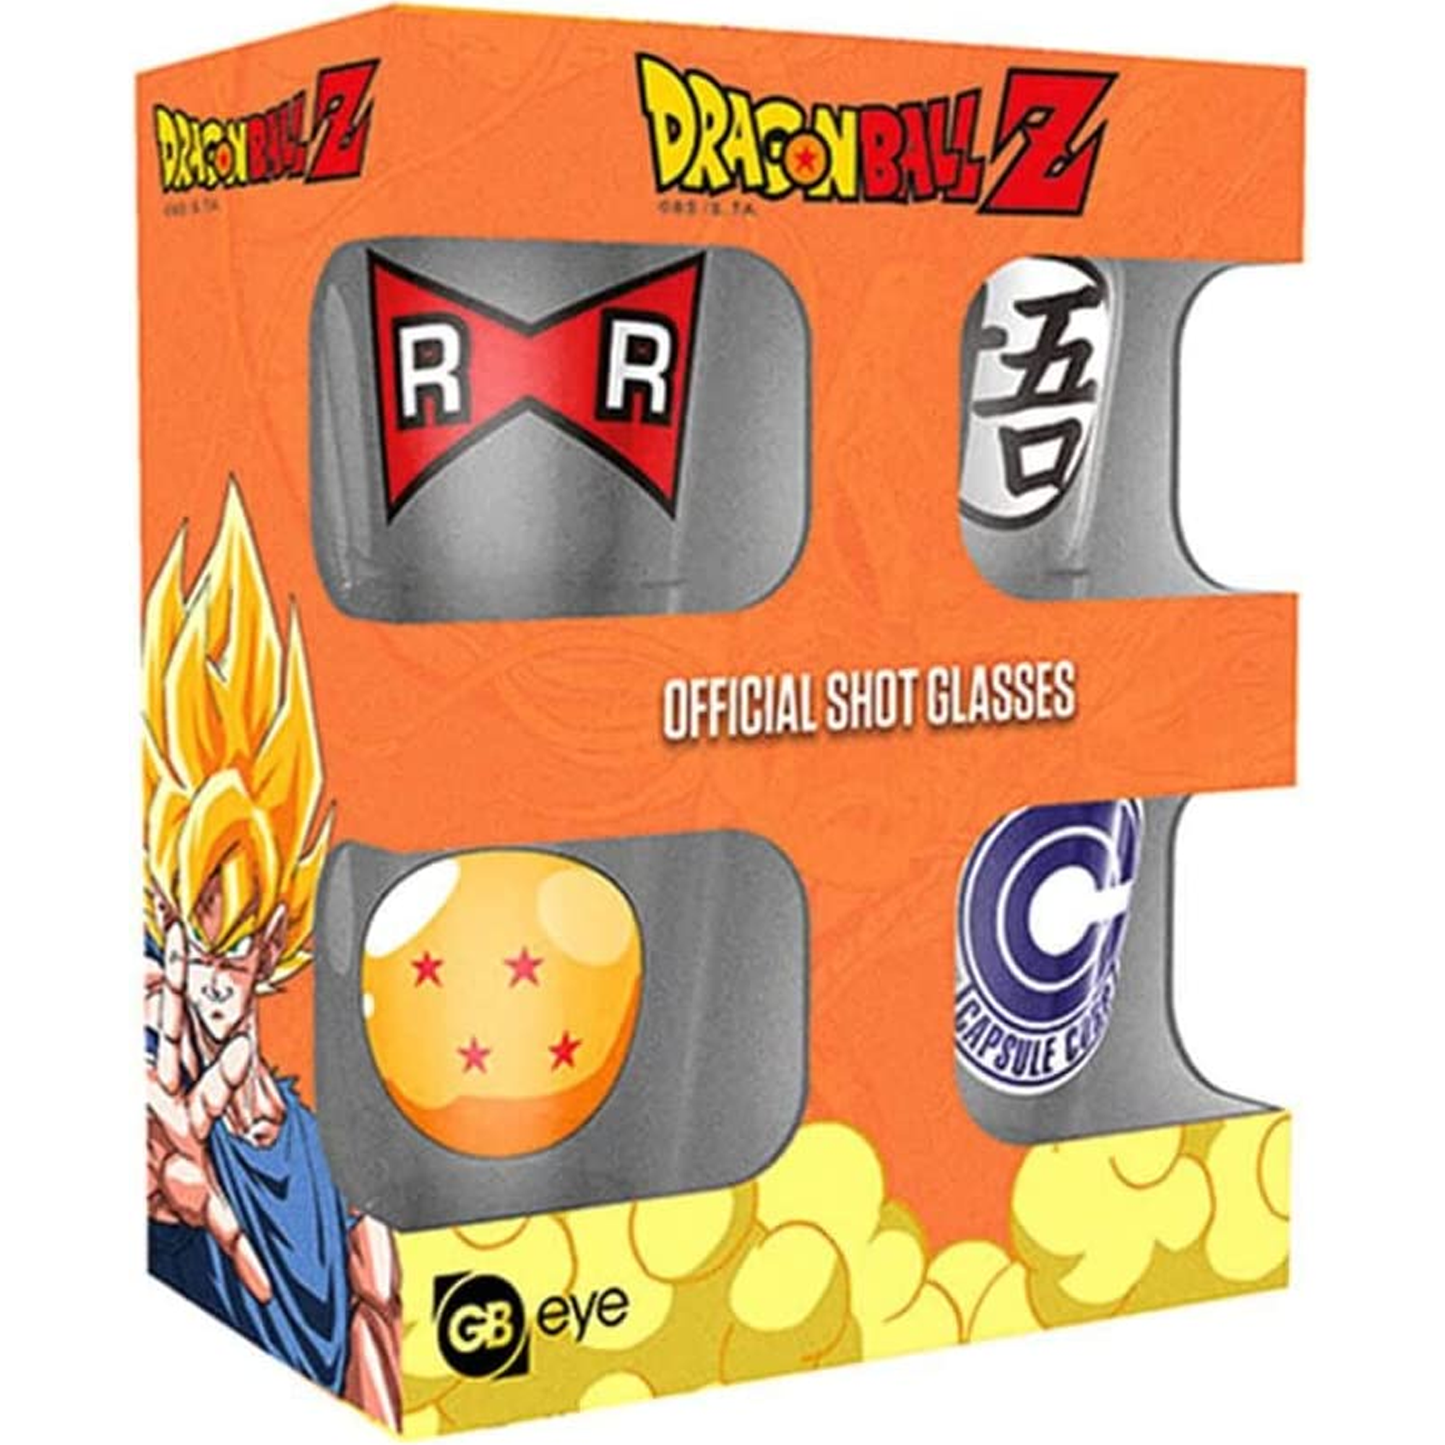 Dragon Ball Z Shot Glass Set in Packaging | Happy Piranha